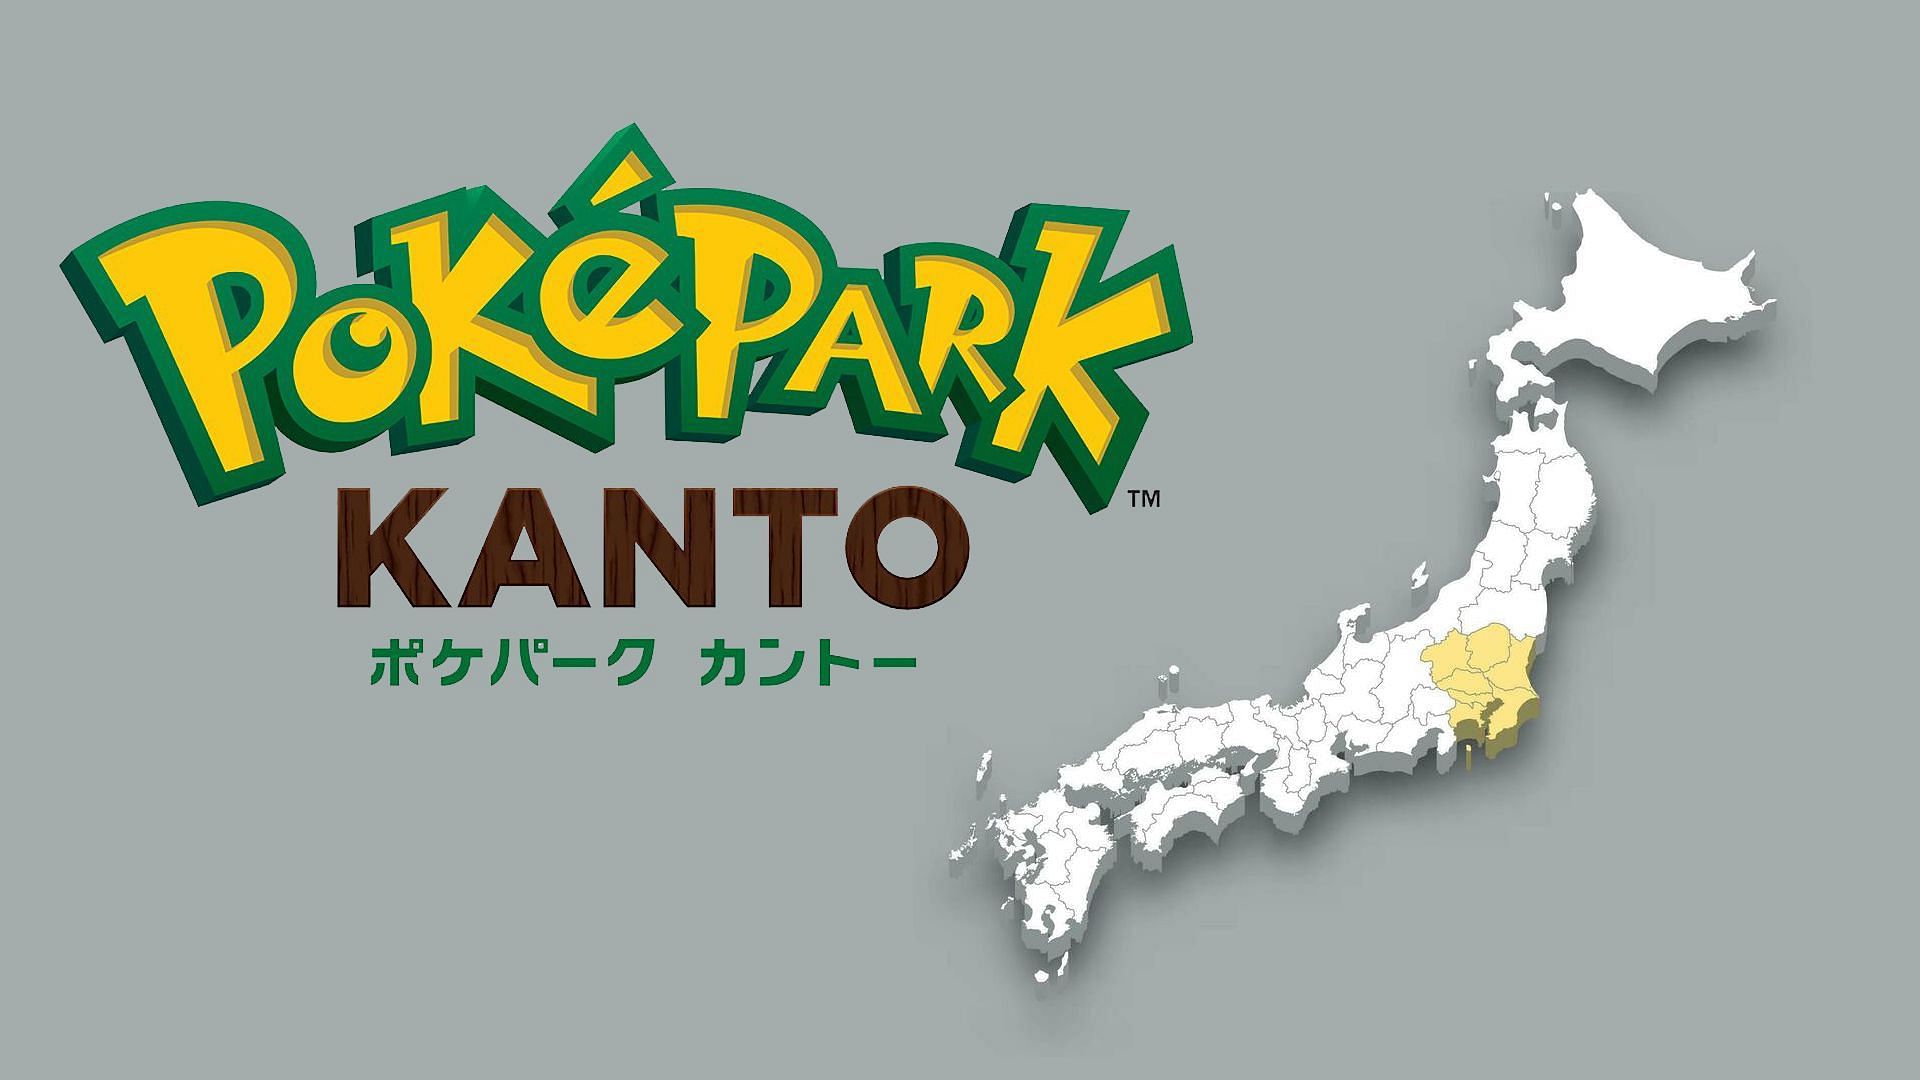 PokePark Kanto is located in Kanto (Image via The Pokemon Company)